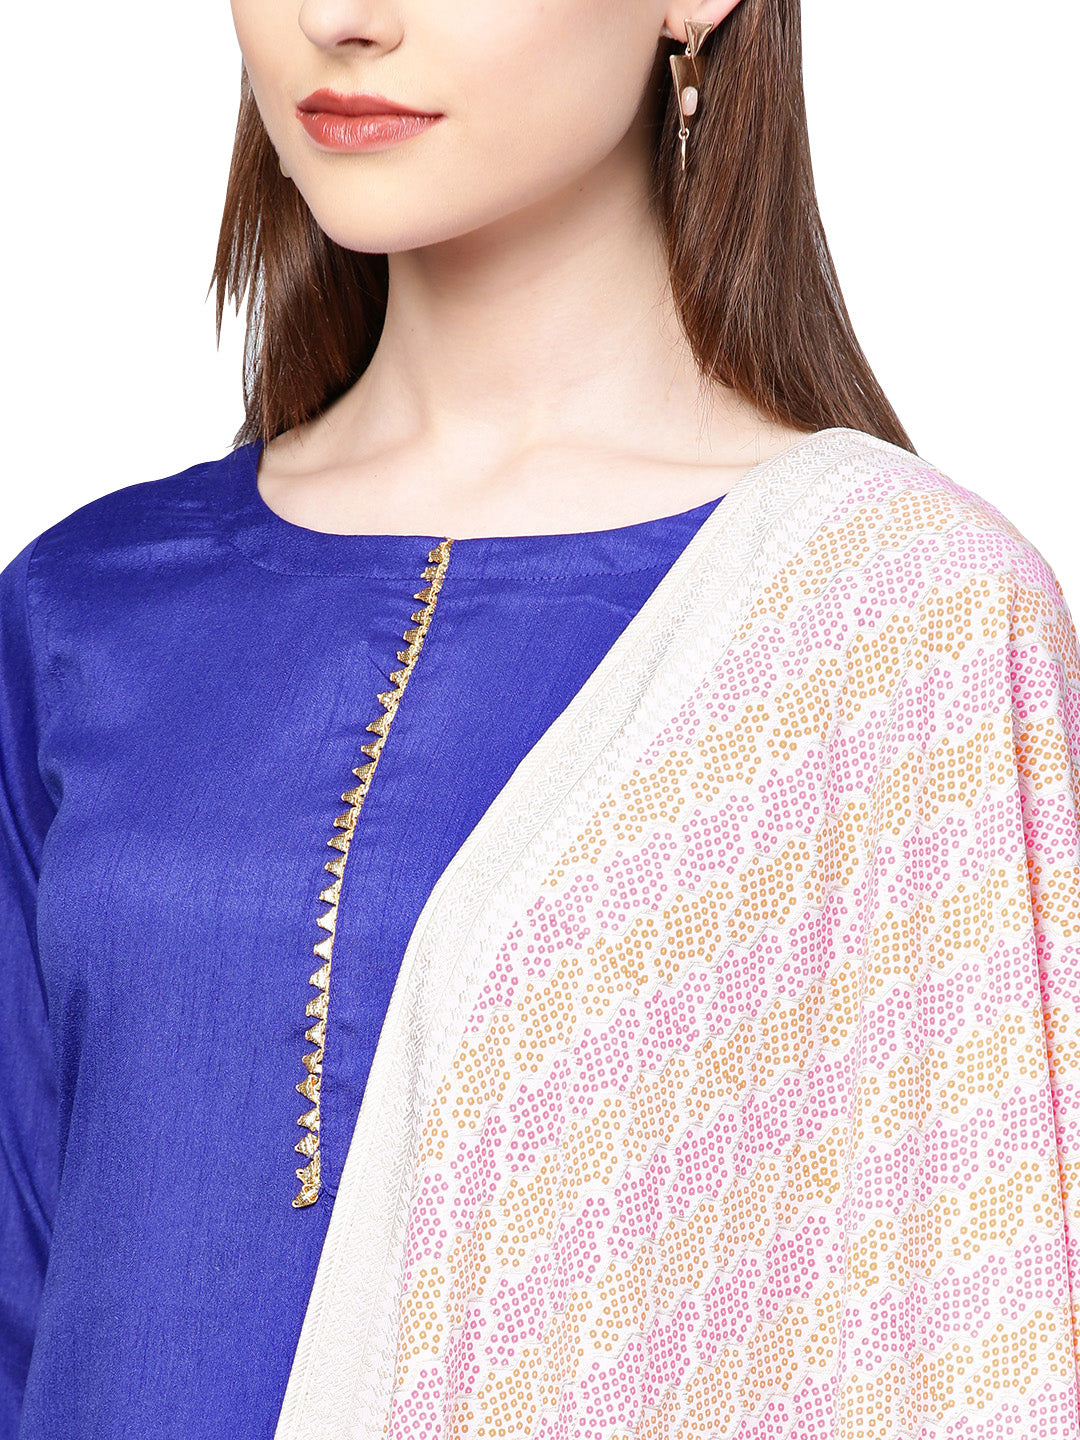 Women's Royal Blue Poly Silk Solid Salwar Suit With Dupatta- Ahalyaa